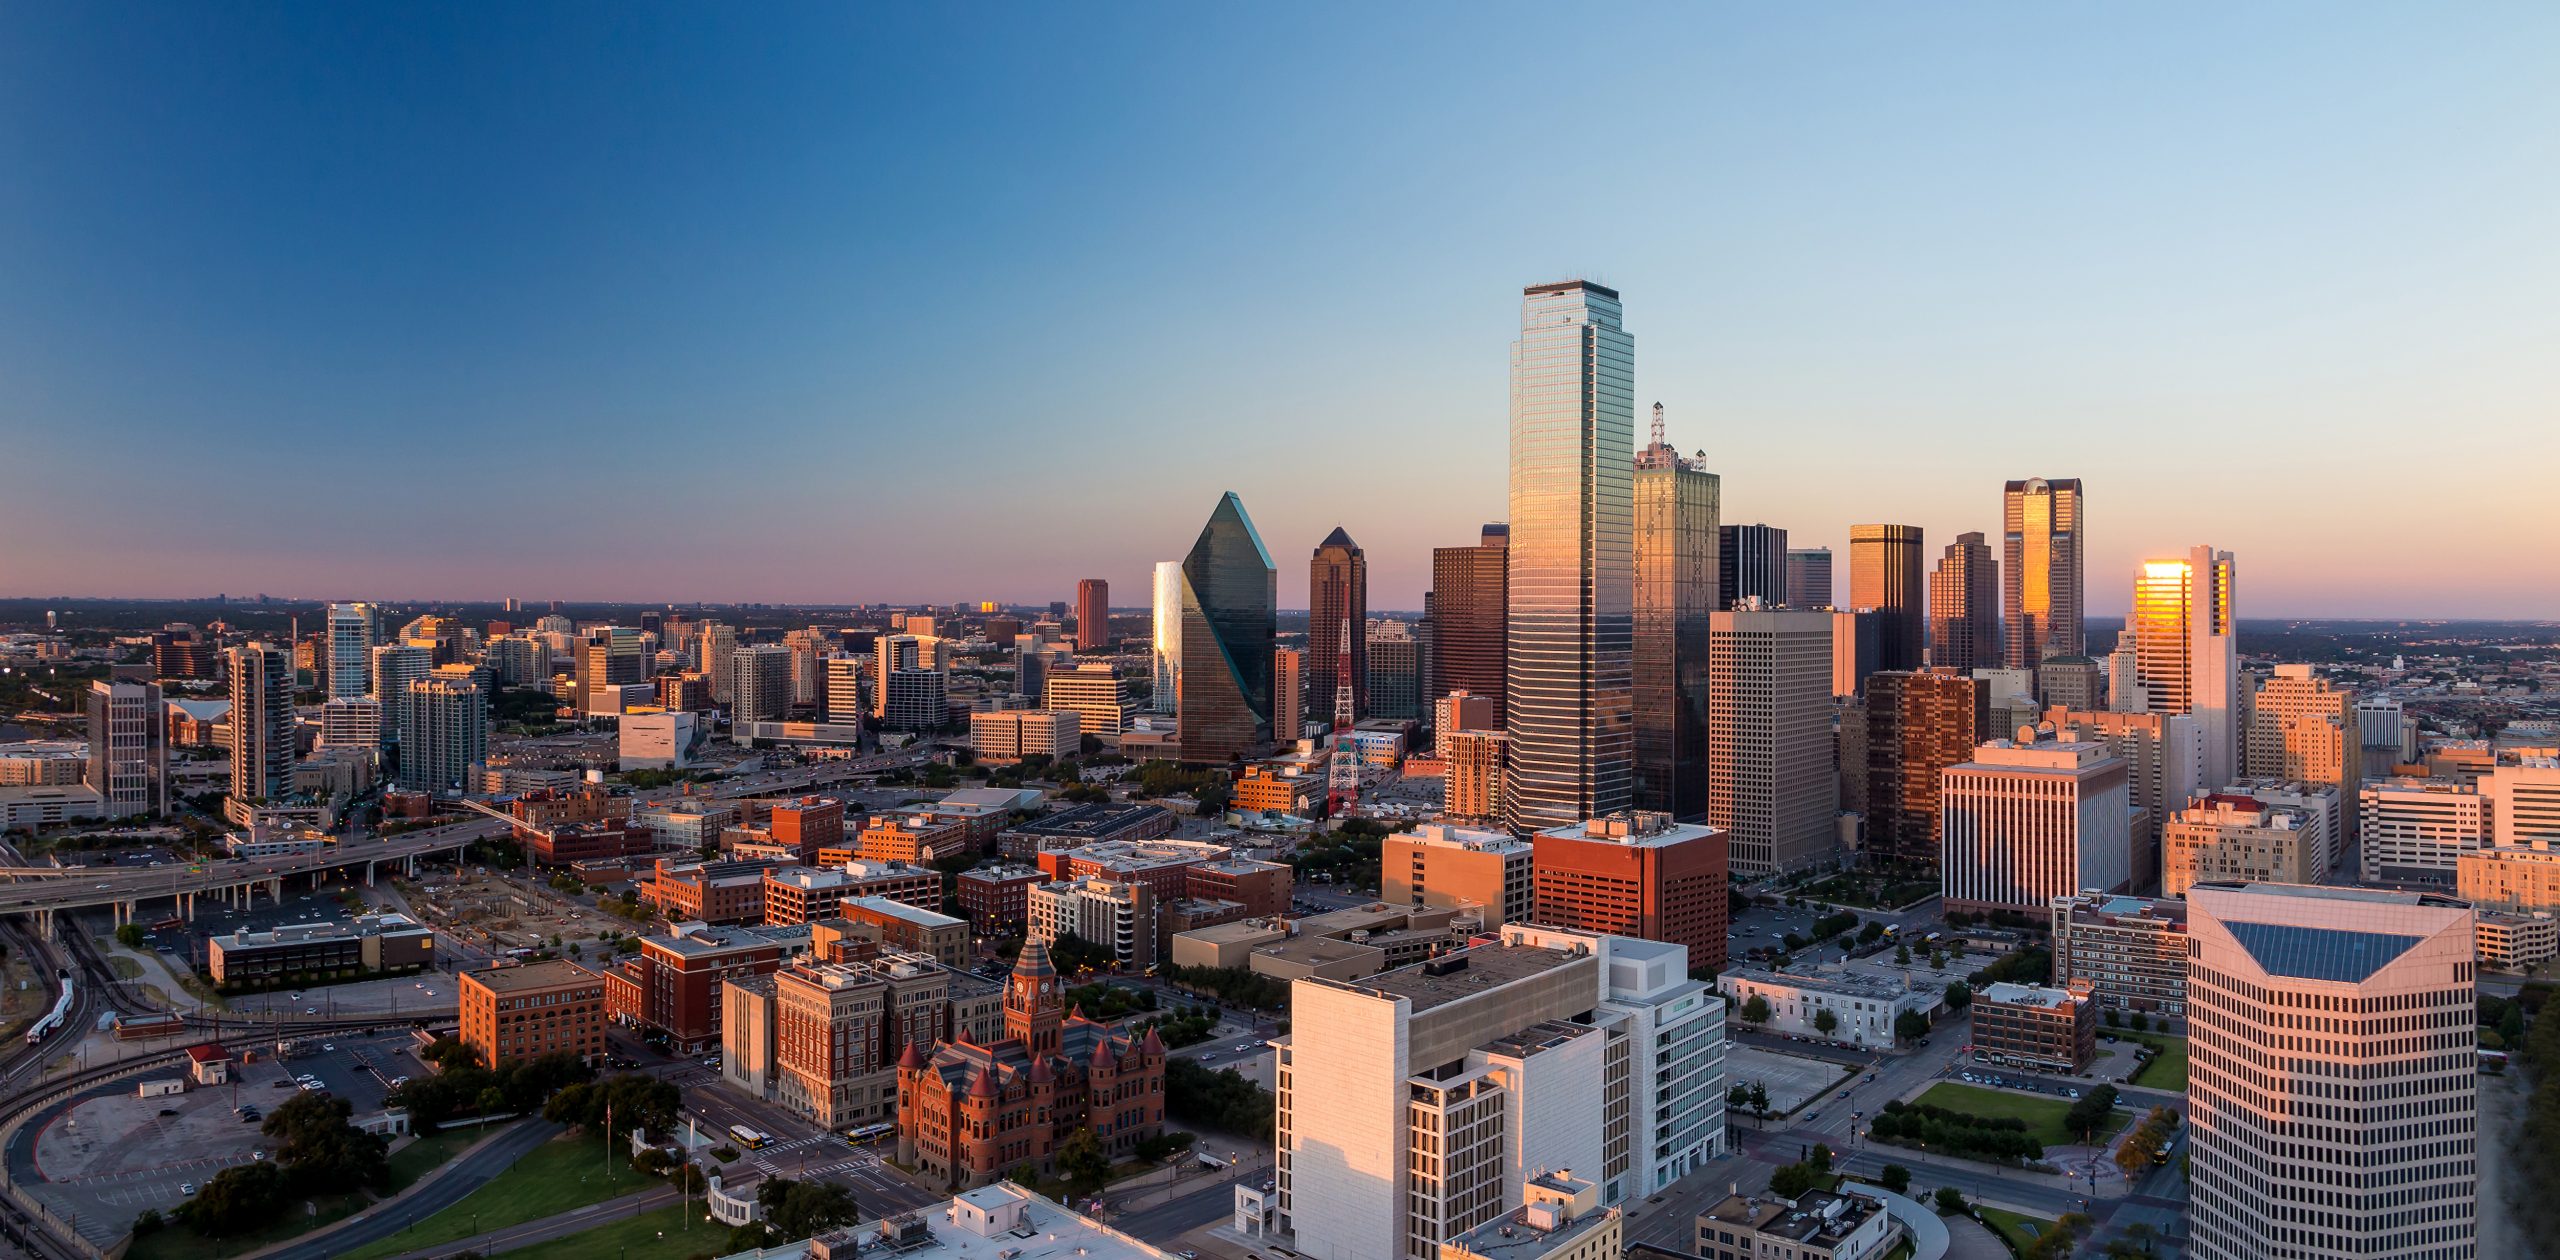 The skyline of Dallas in Texas